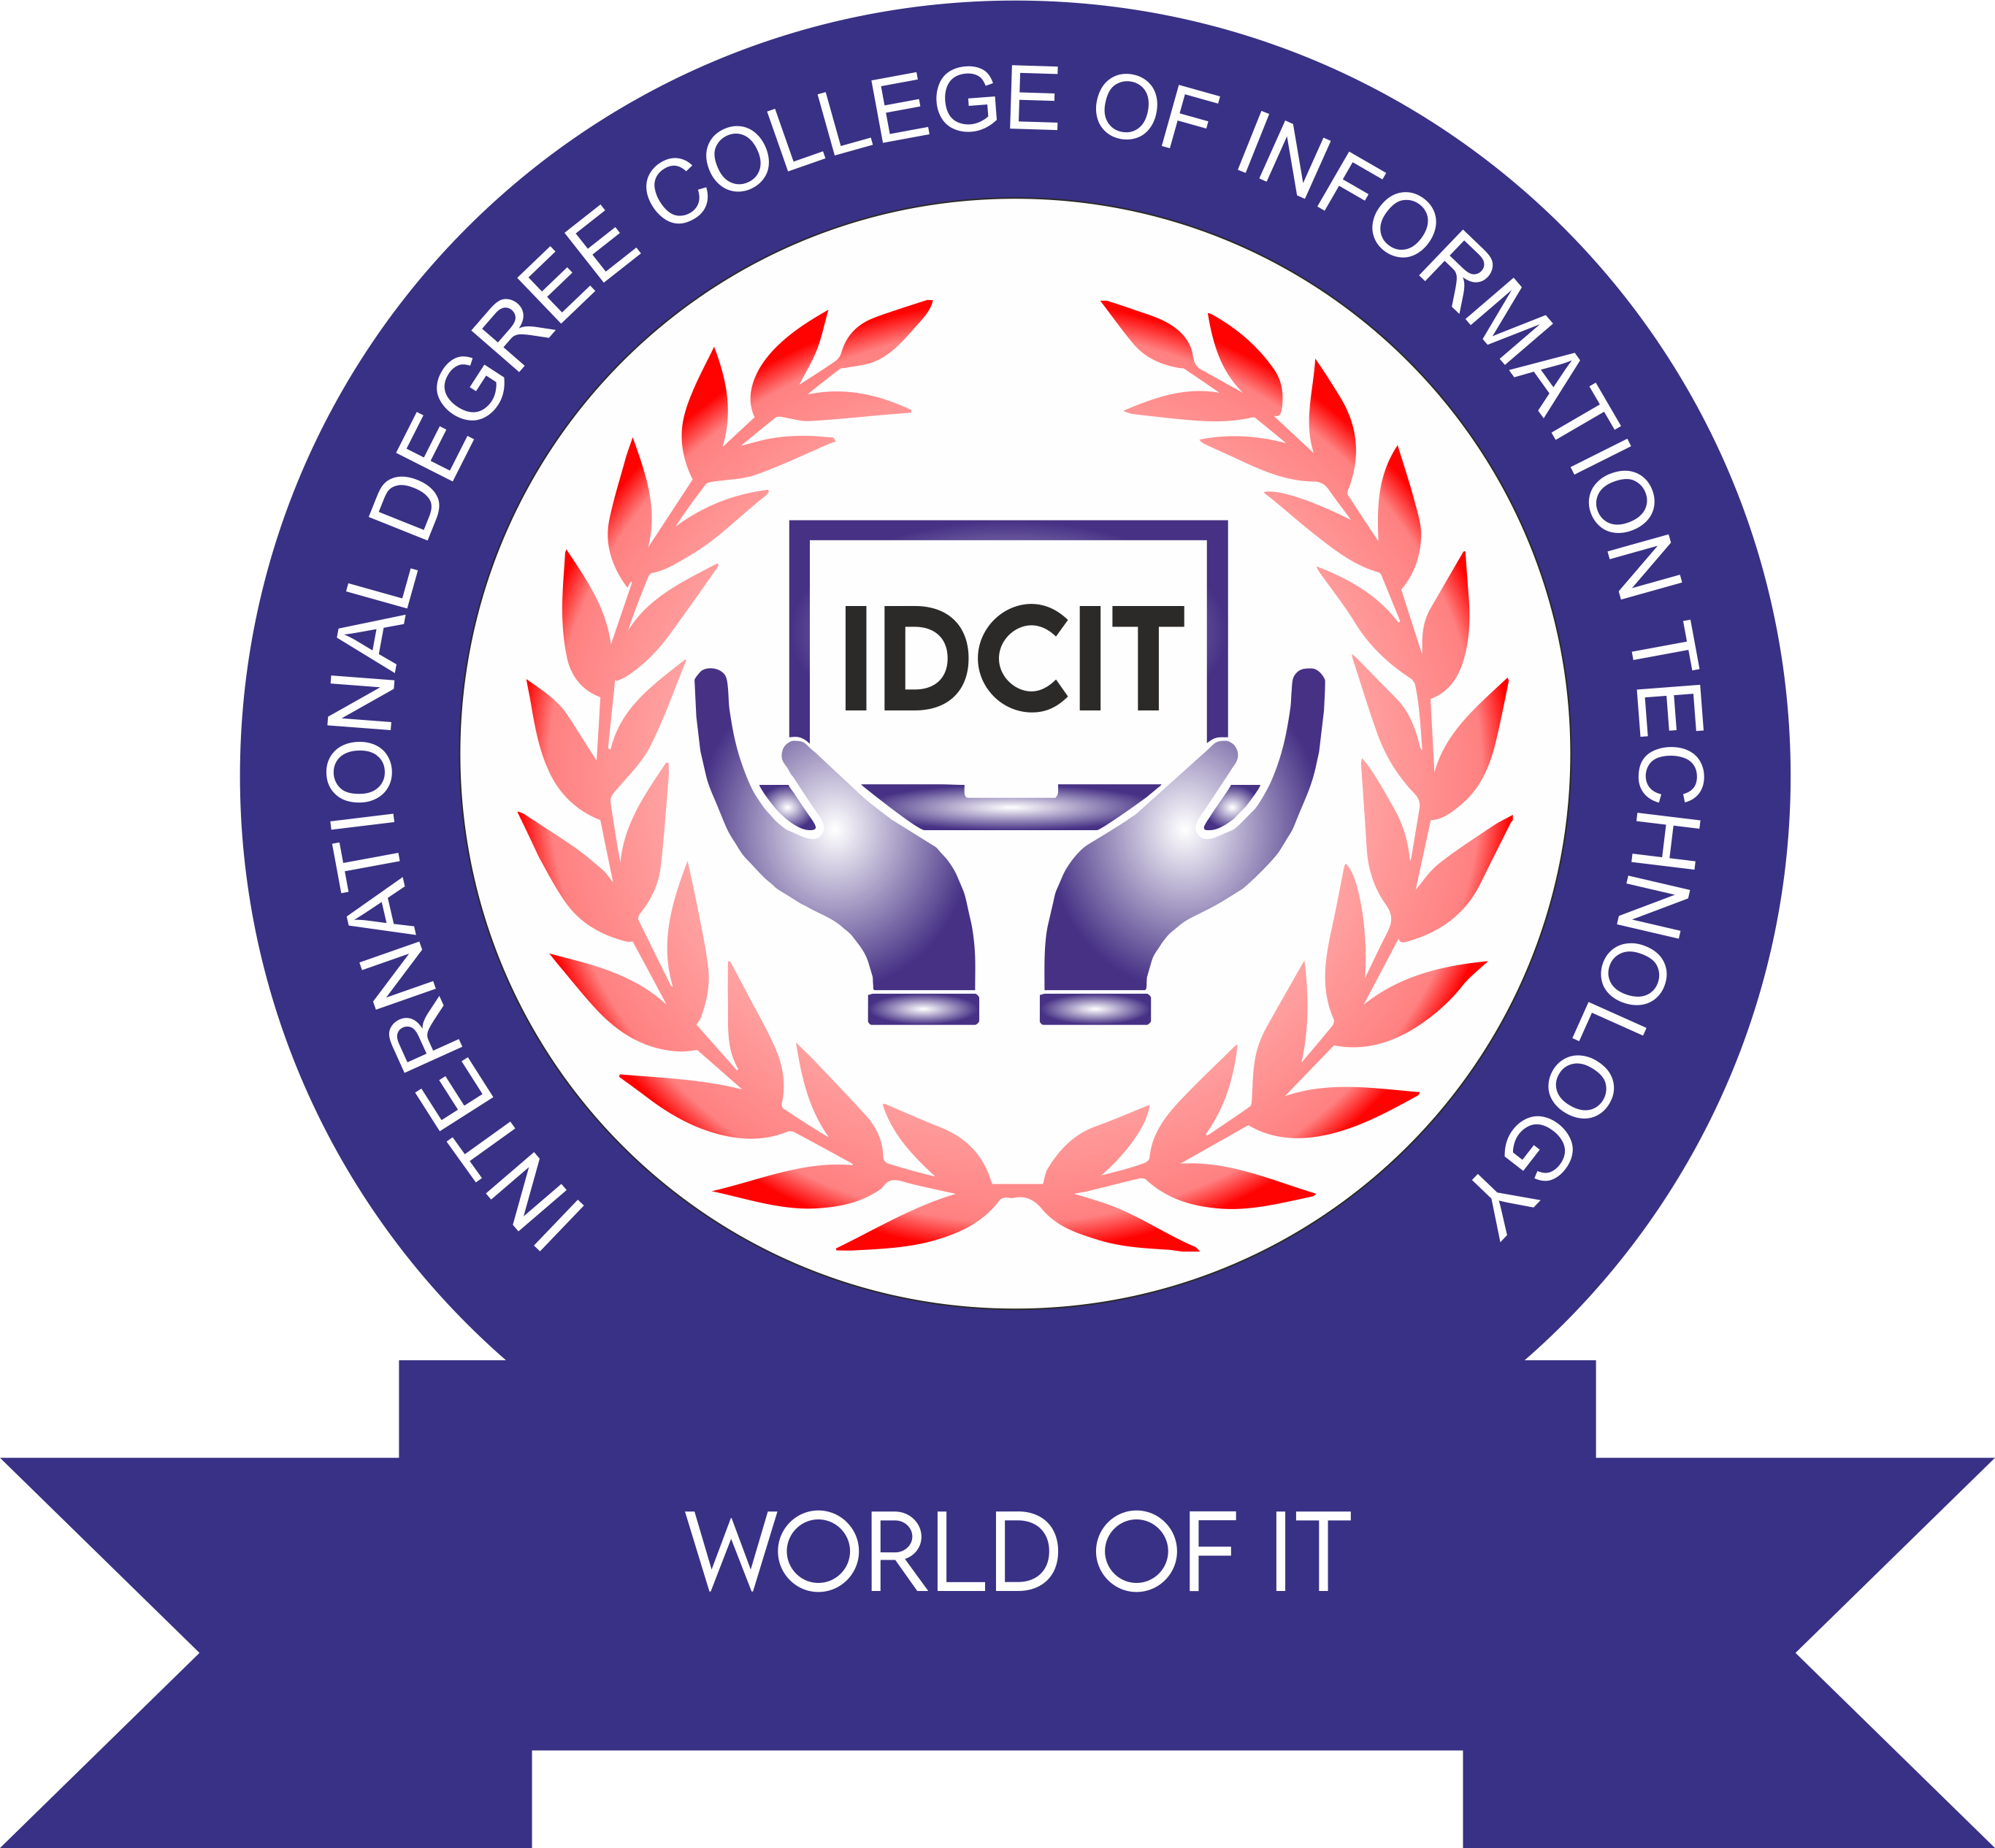 INTERNATIONAL DEGREE COLLEGE OF INFORMATION & TECHNOLOGY

 (IDCIT)